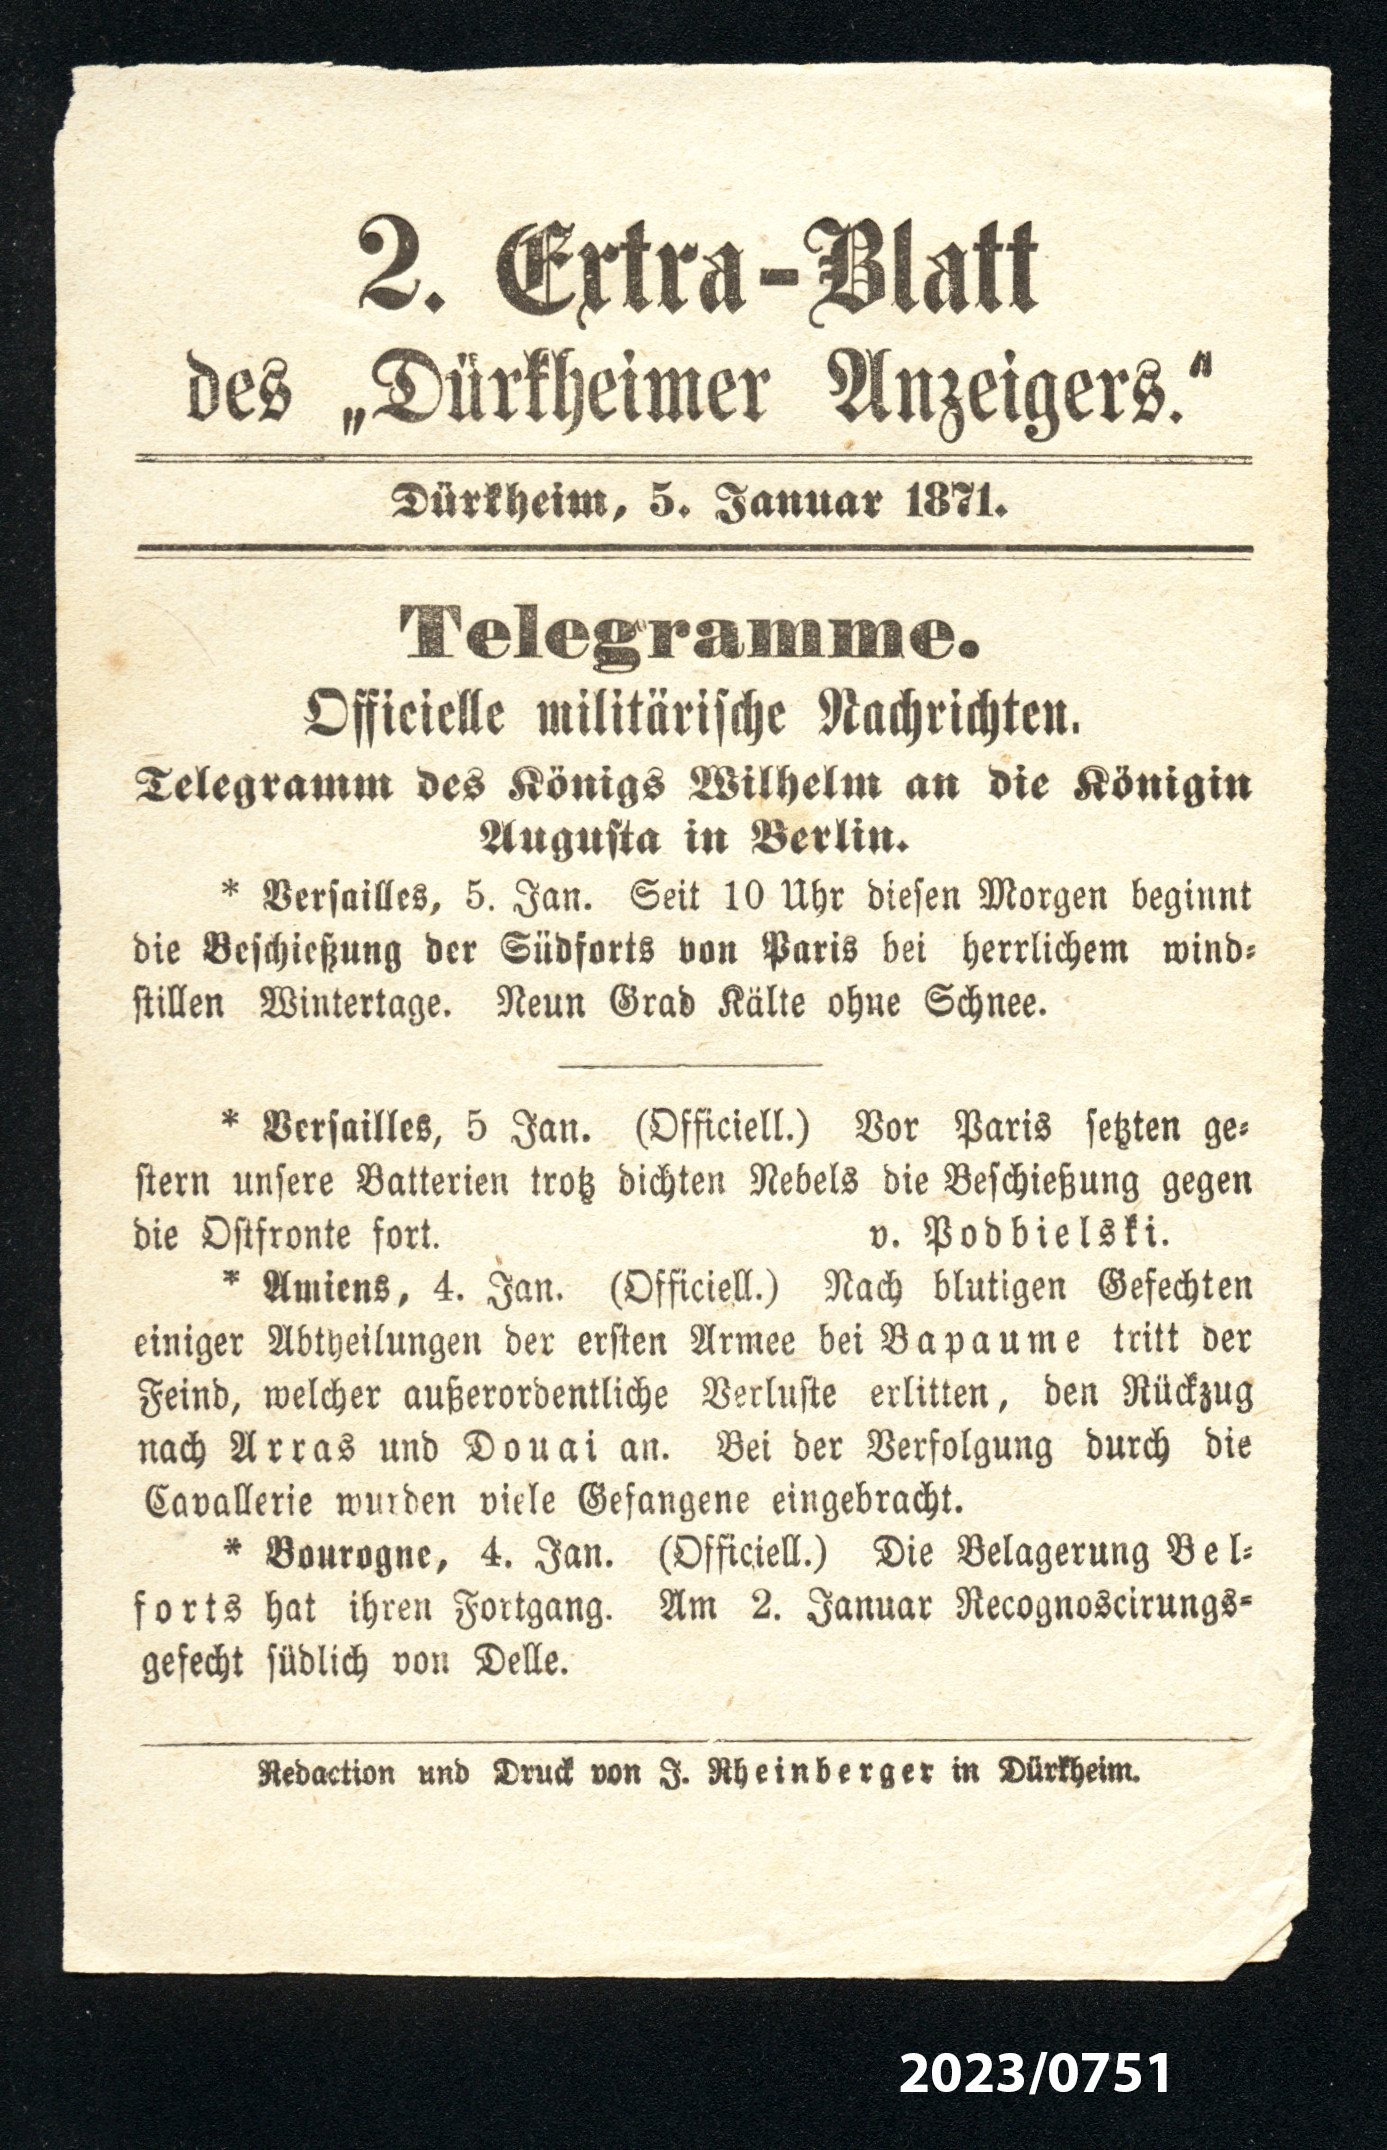 2. Extra-Blatt des "Dürkheimer Anzeigers." 5.1.1871 (Stadtmuseum Bad Dürkheim im Kulturzentrum Haus Catoir CC BY-NC-SA)